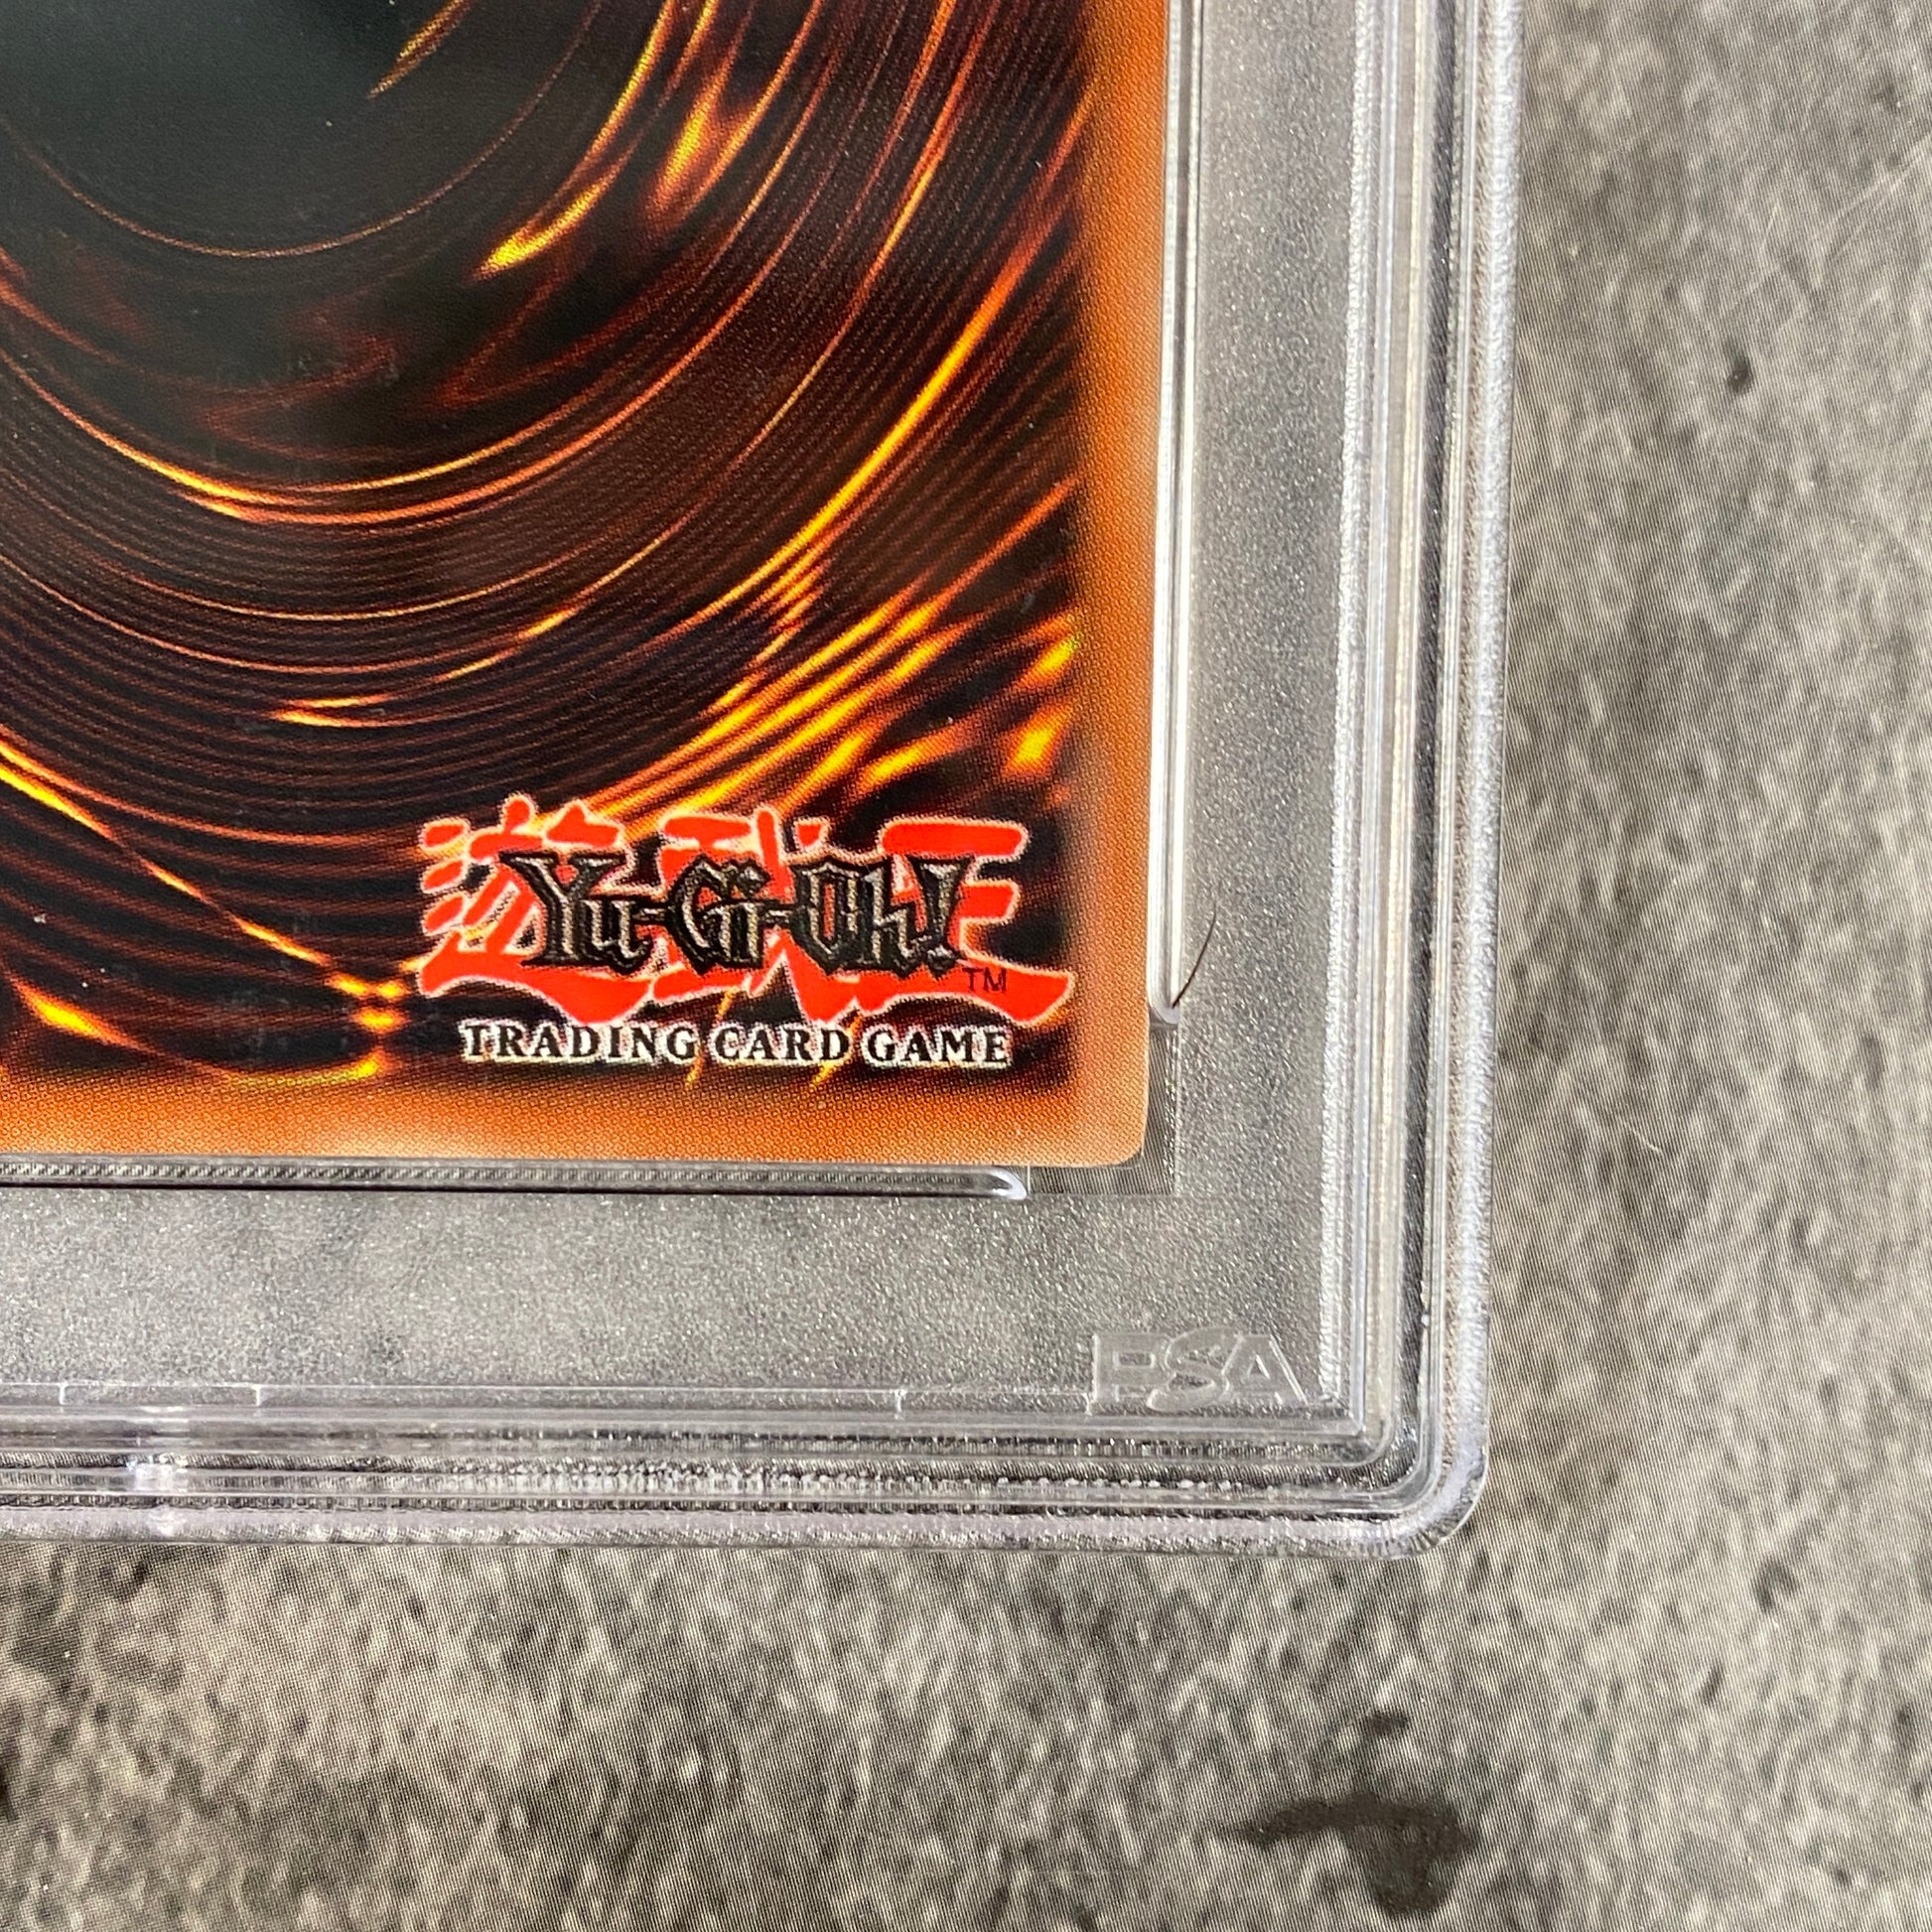 PSA 9 Horus the Black Flame Dragon LV8 1st Edition Ultimate Rare SOD-E